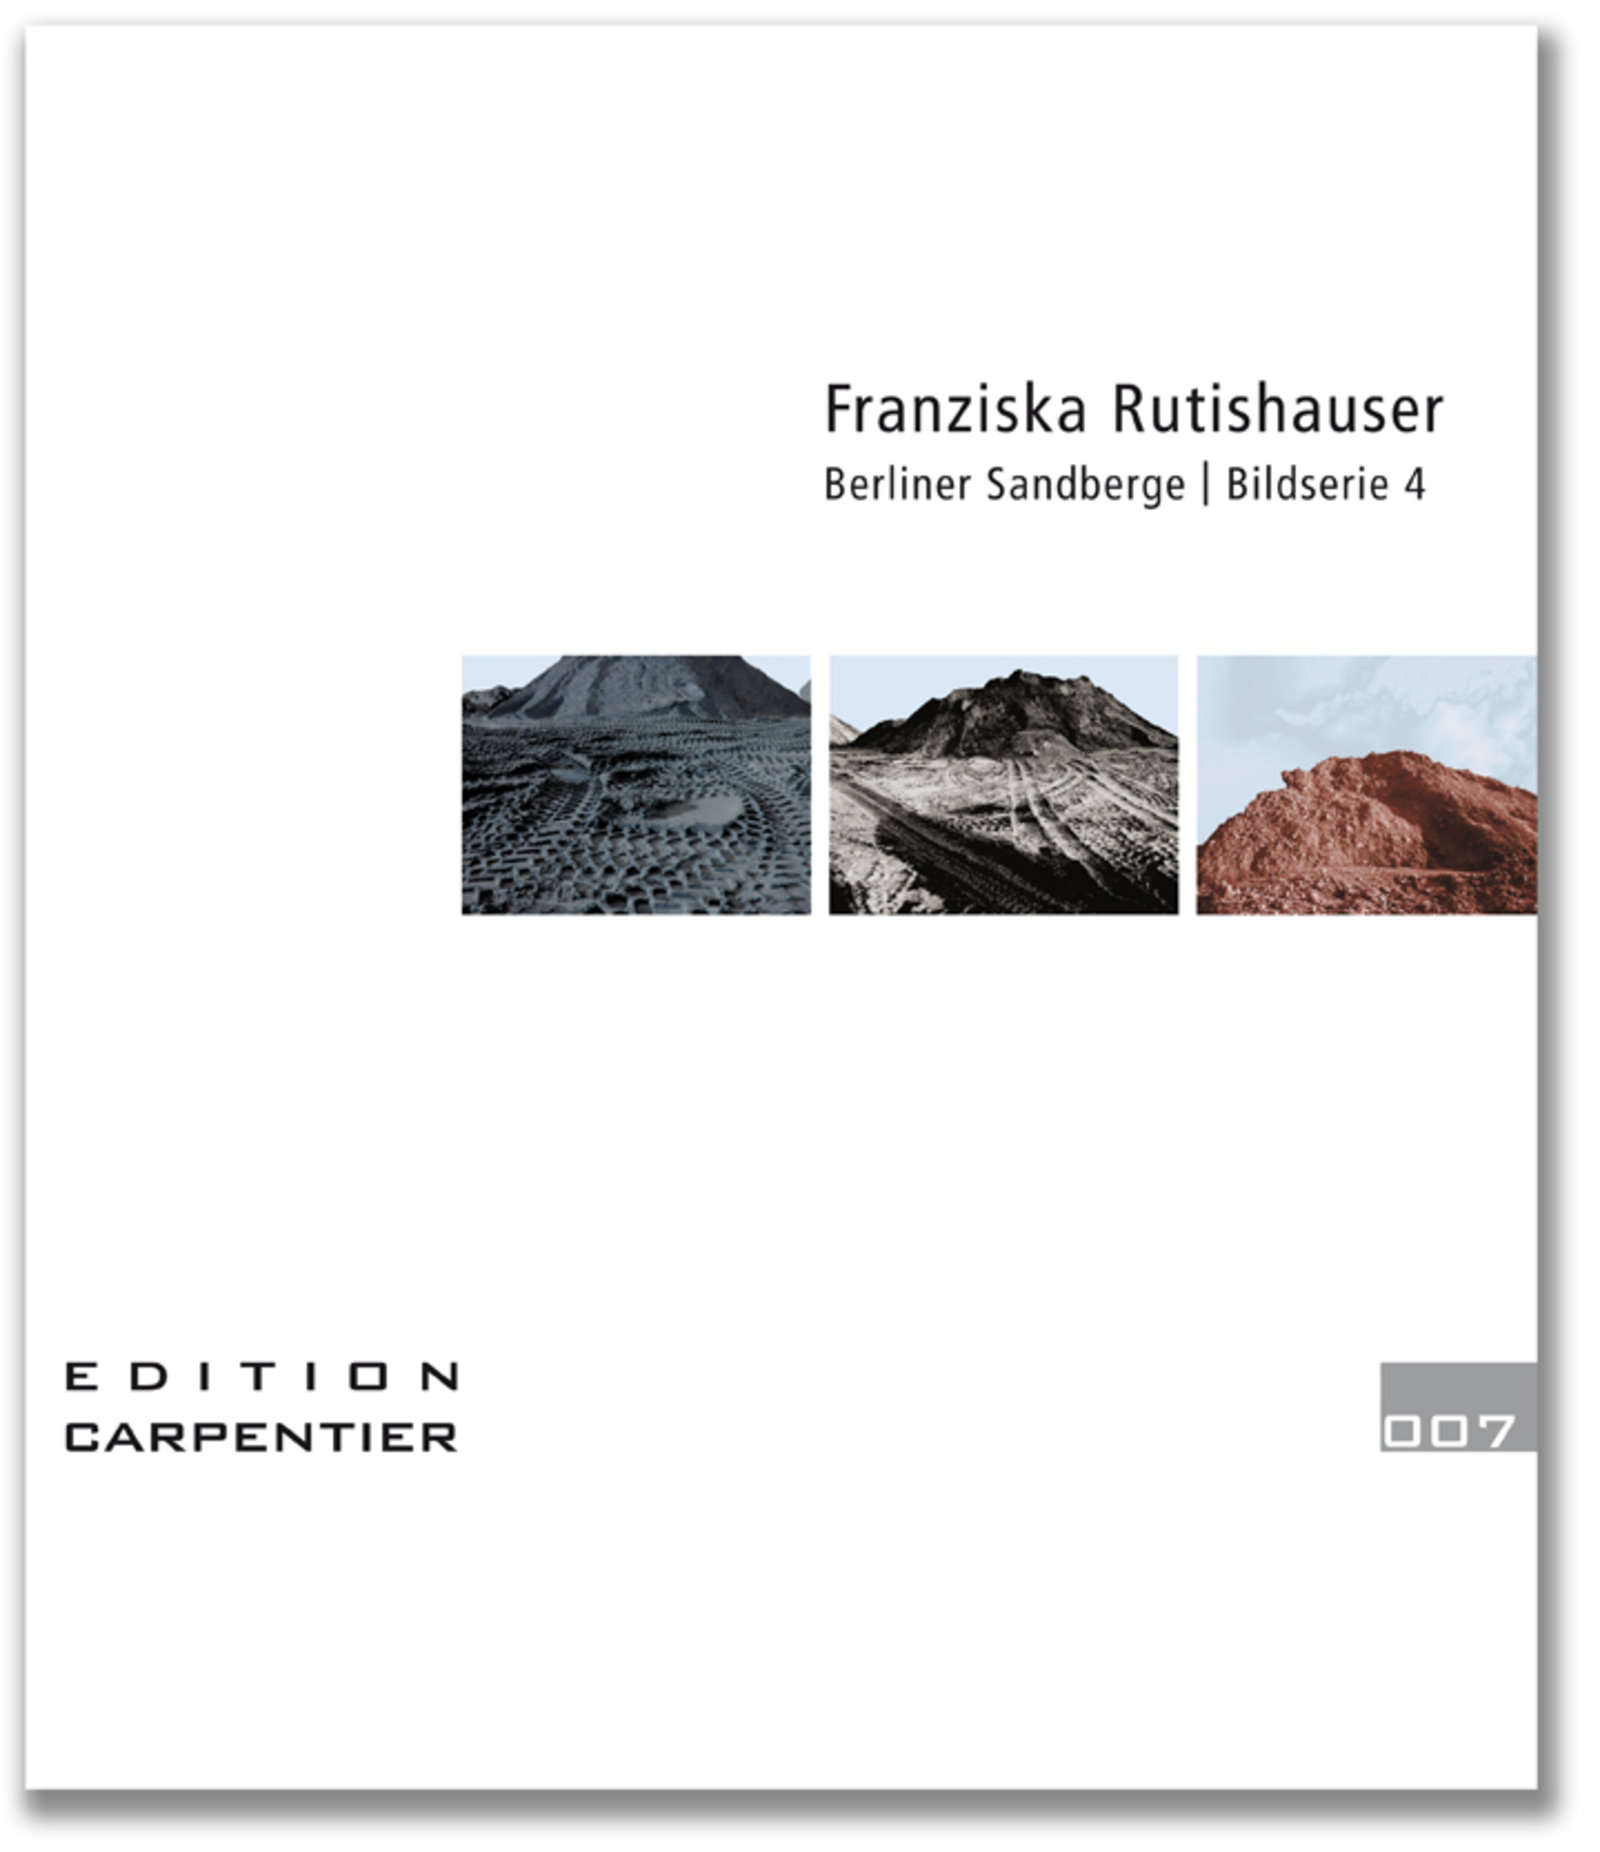 Franziska Rutishauser, publications: Berlin Sand mountains (Berliner Sandberge)